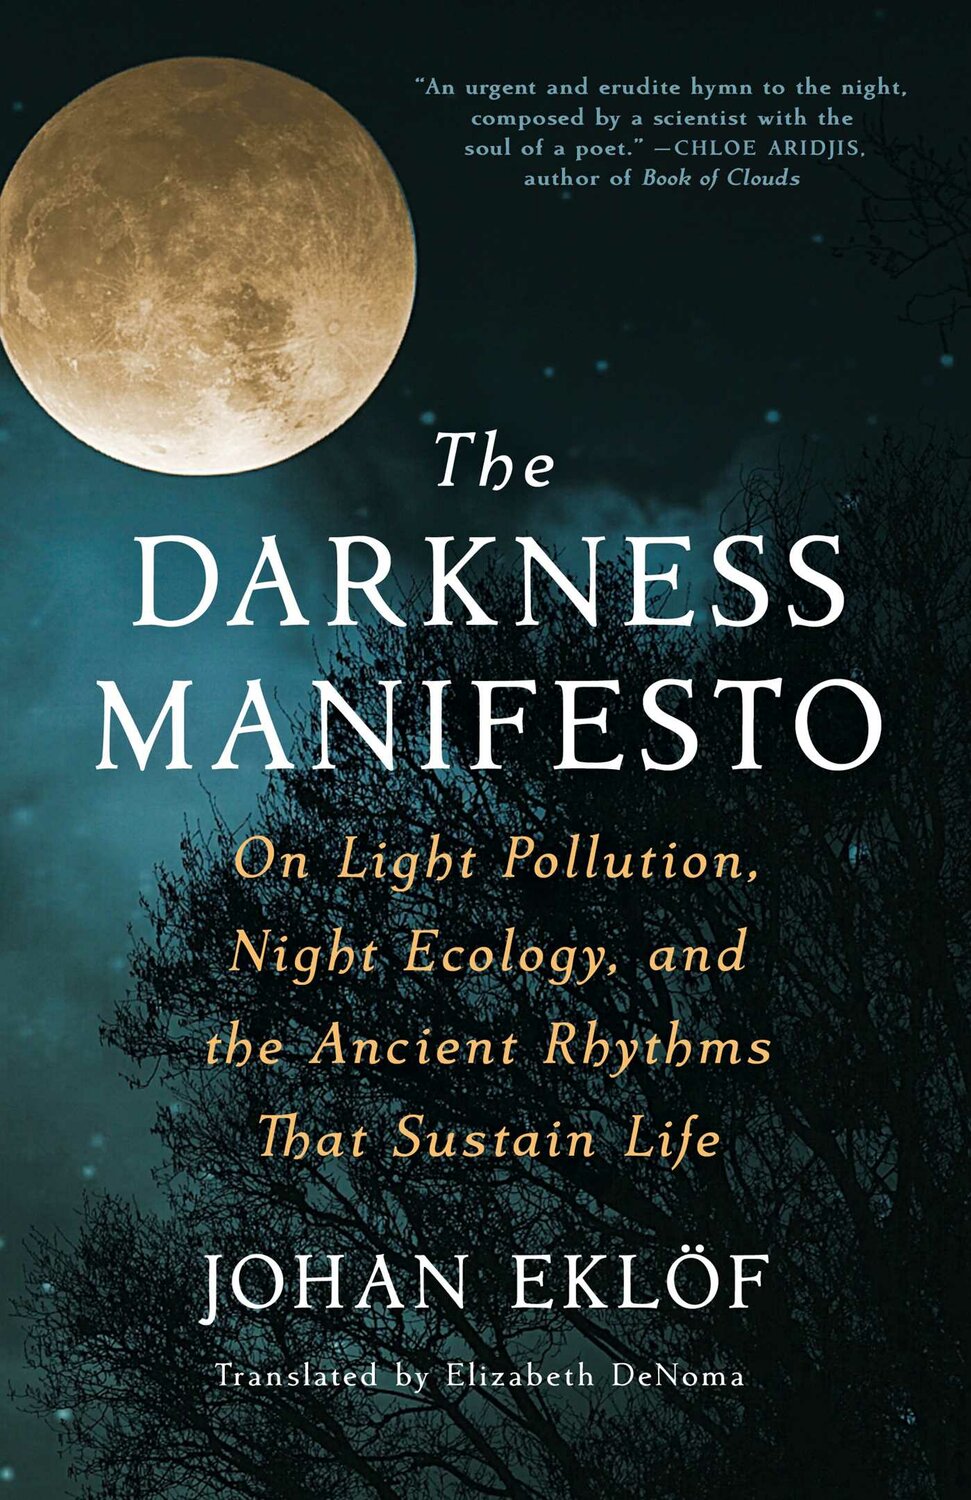 "The Darkness Manifesto"